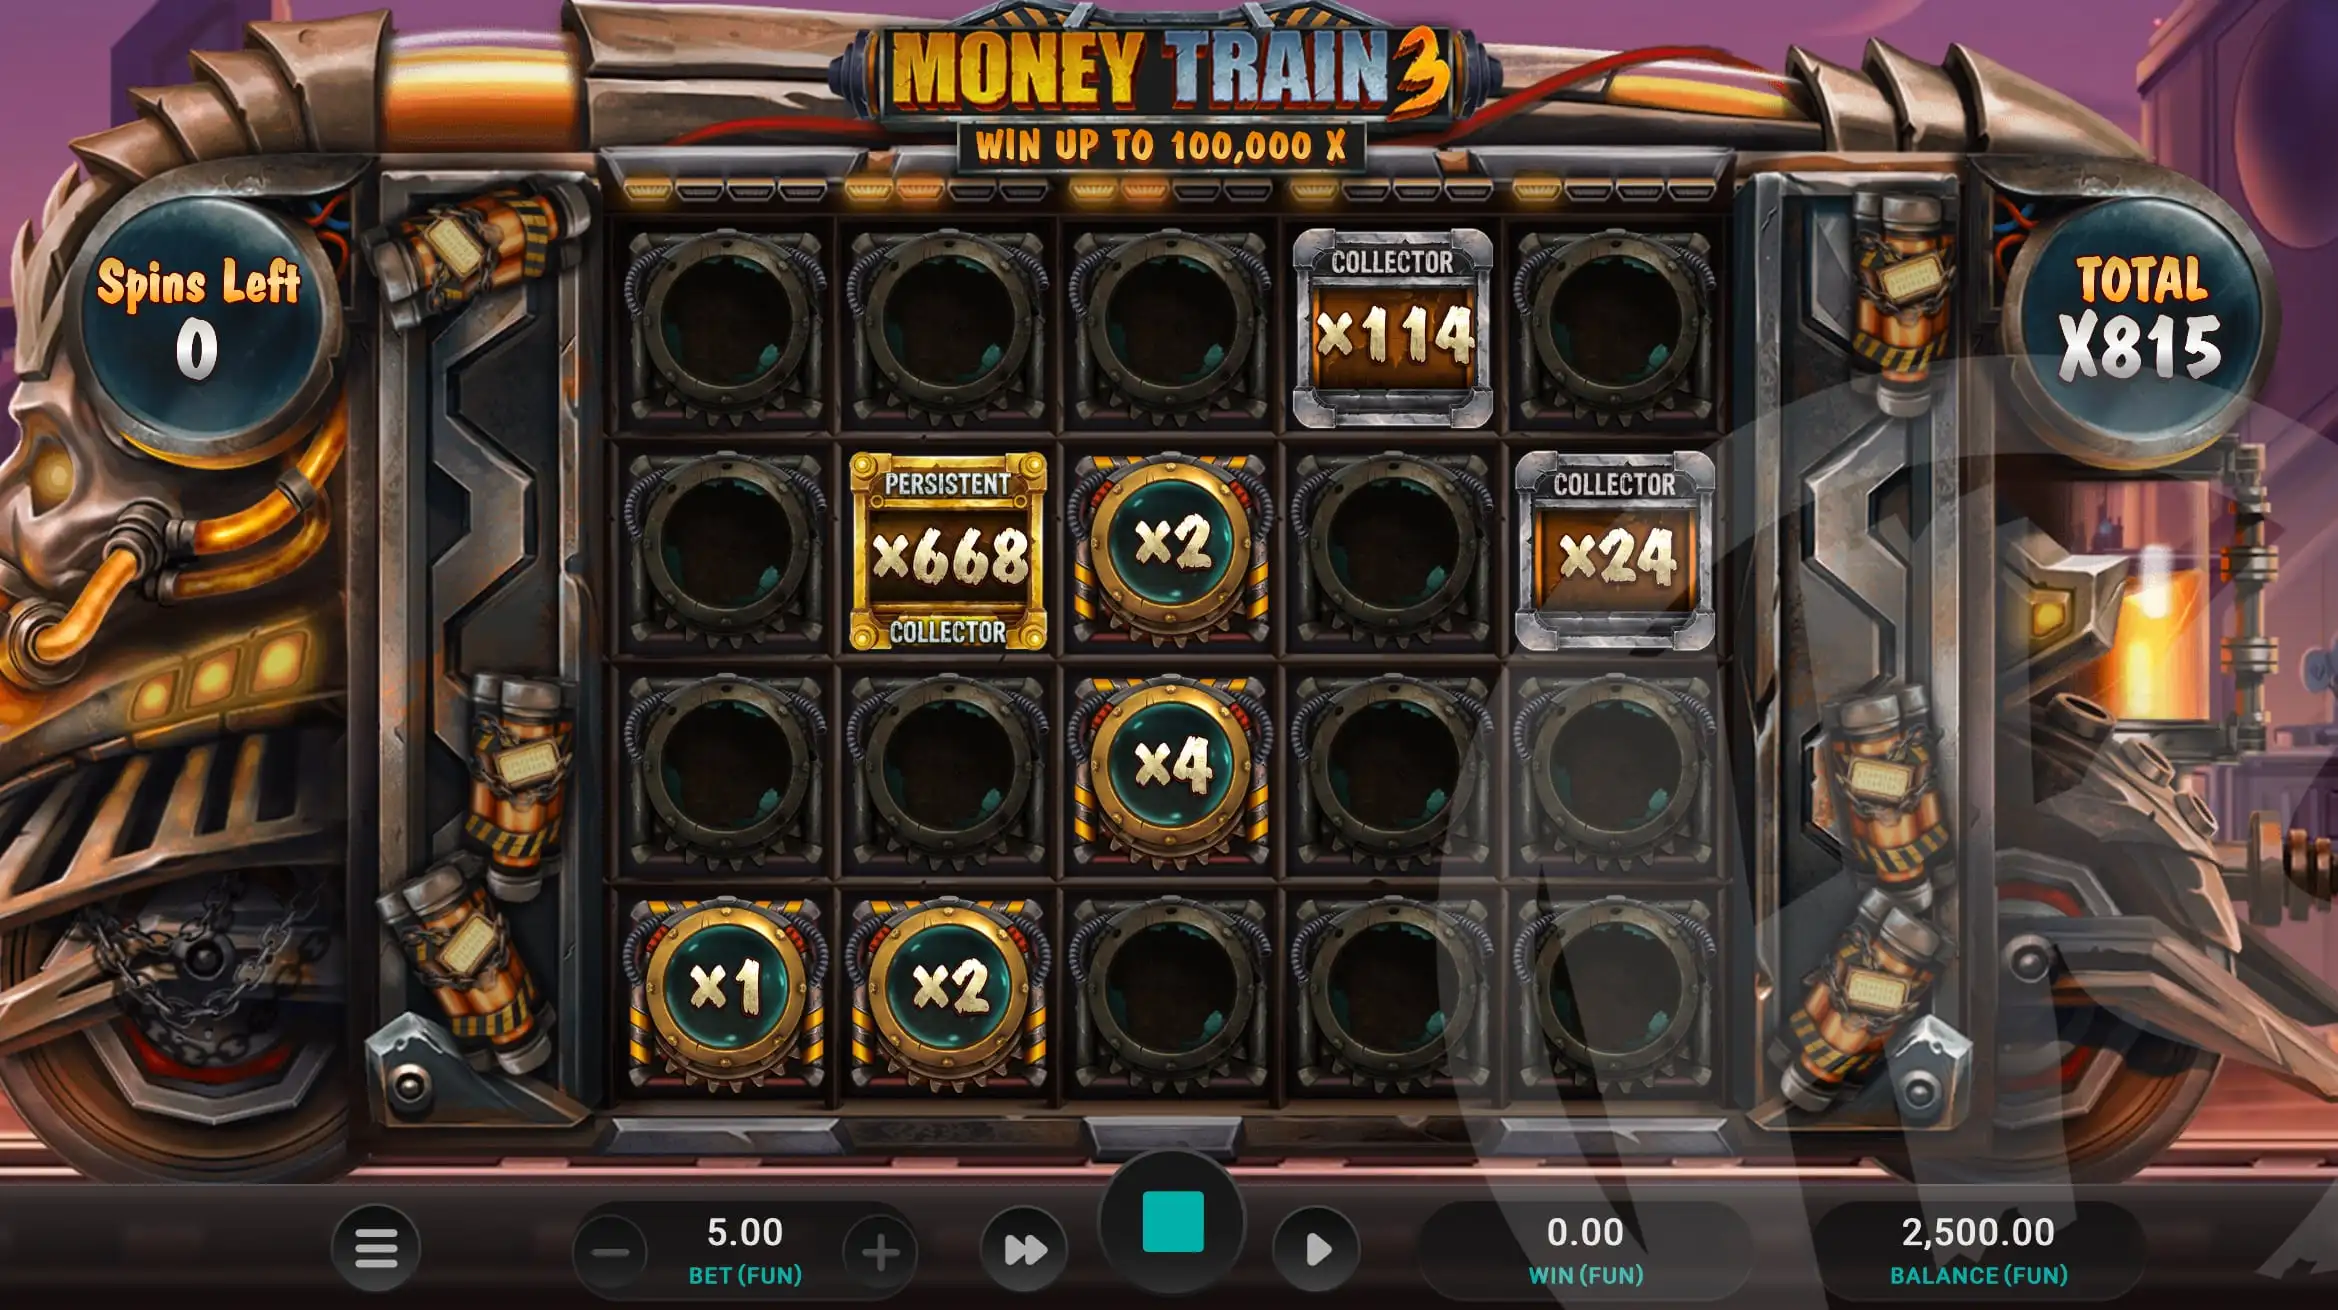 Money Train 3 Persistent Collector